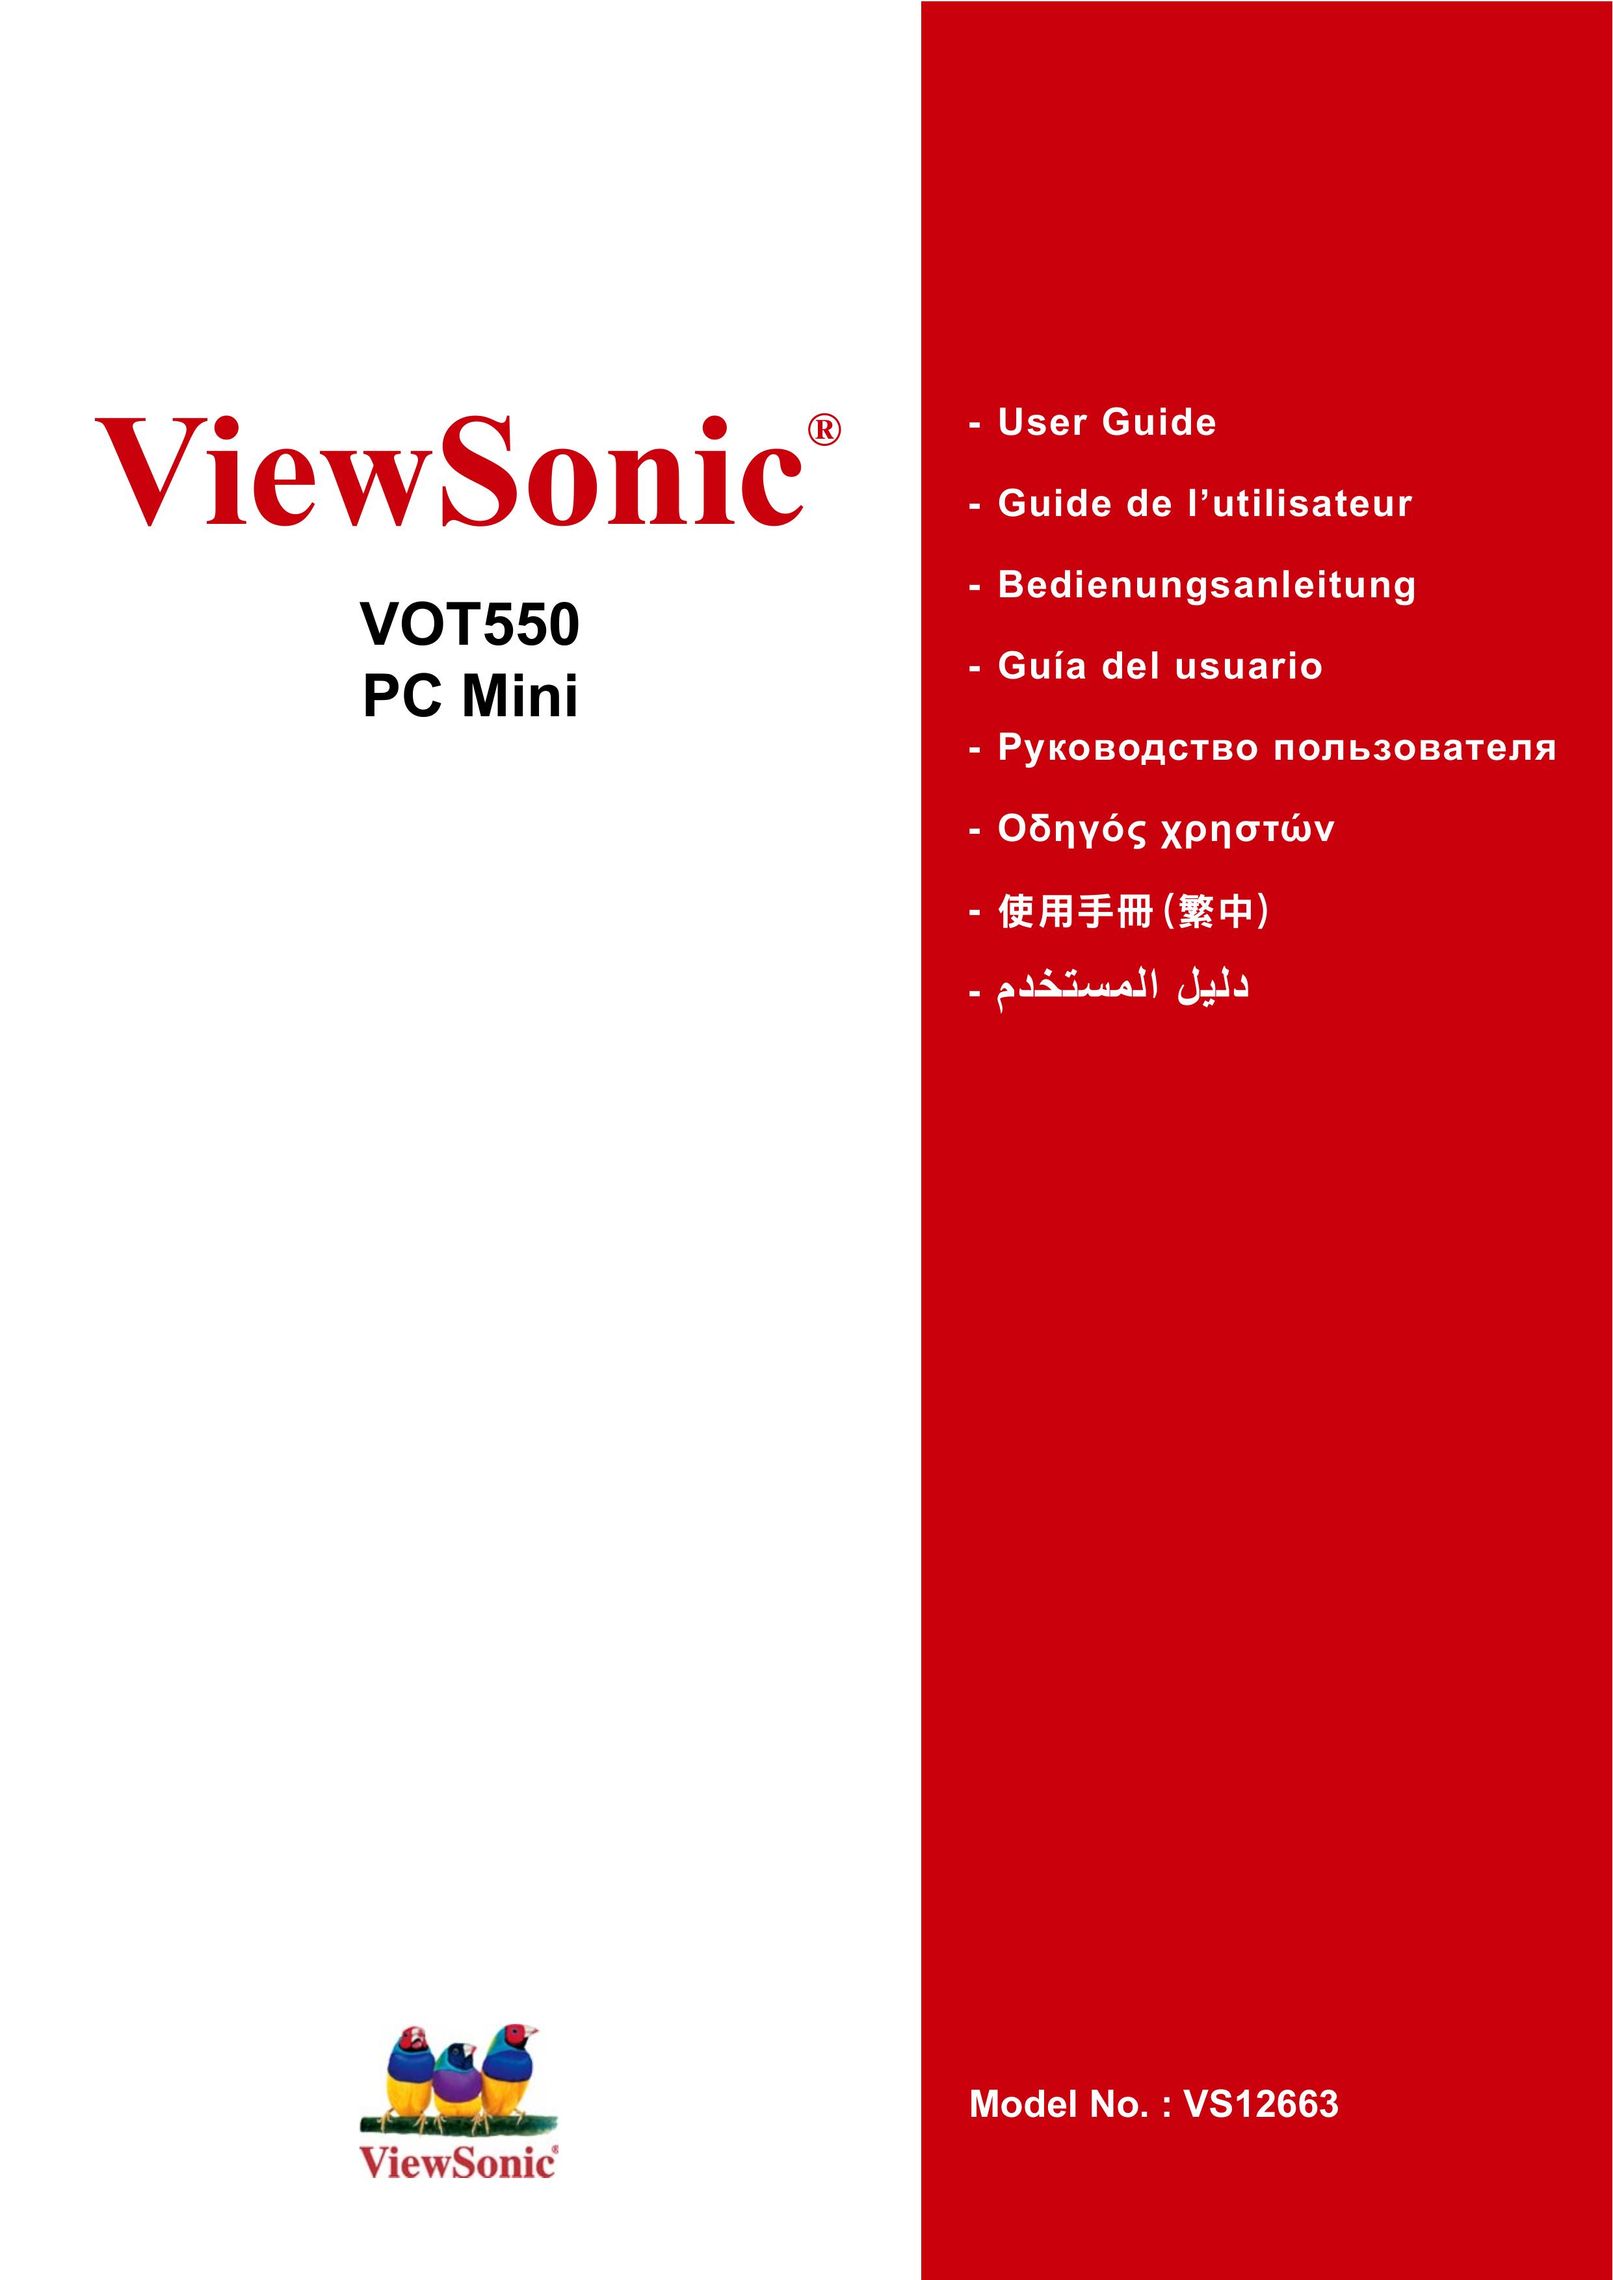 ViewSonic VOT550 Personal Computer User Manual